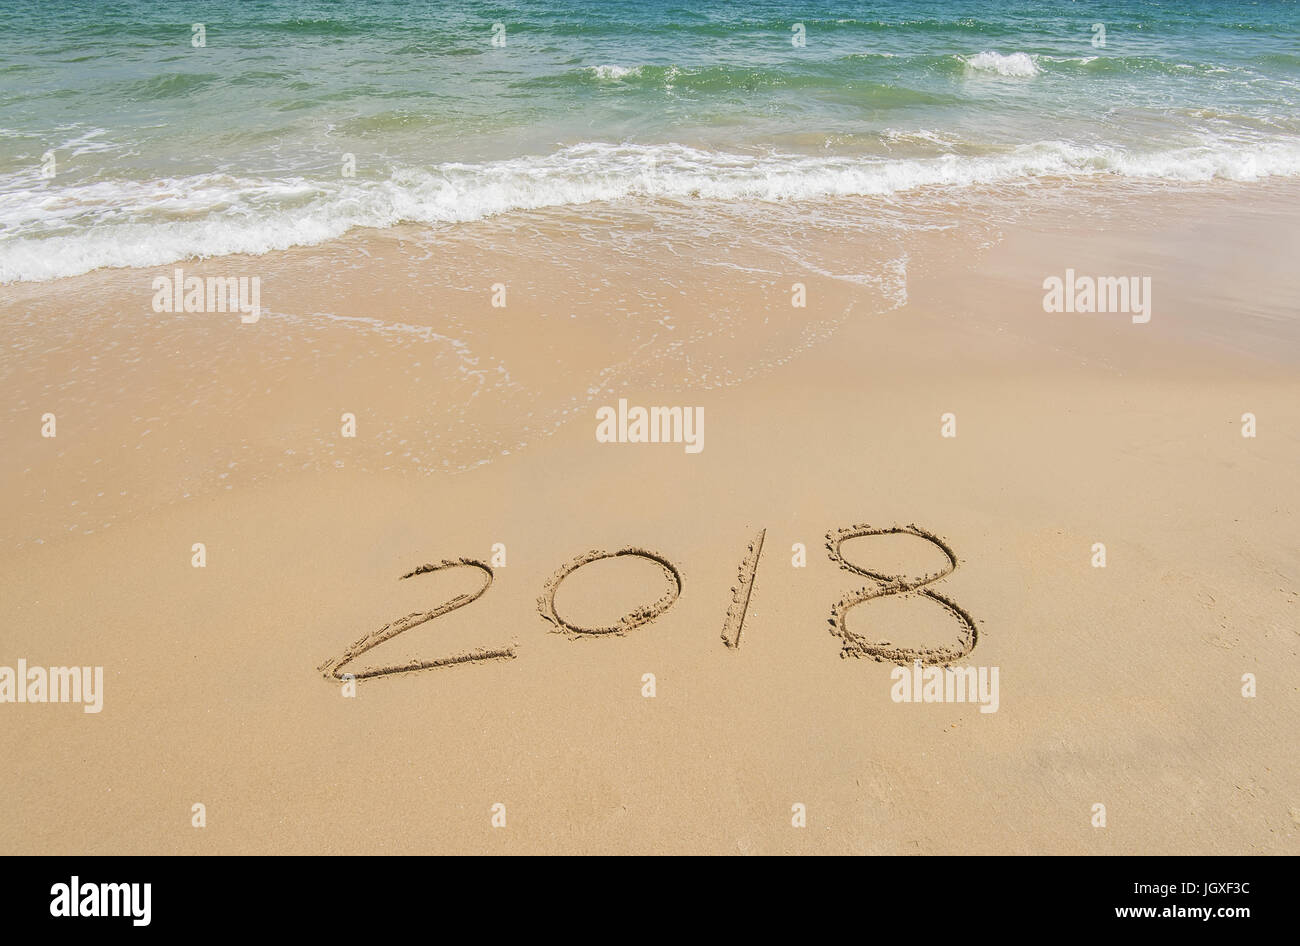 2018 written in sand write on tropical beach Stock Photo